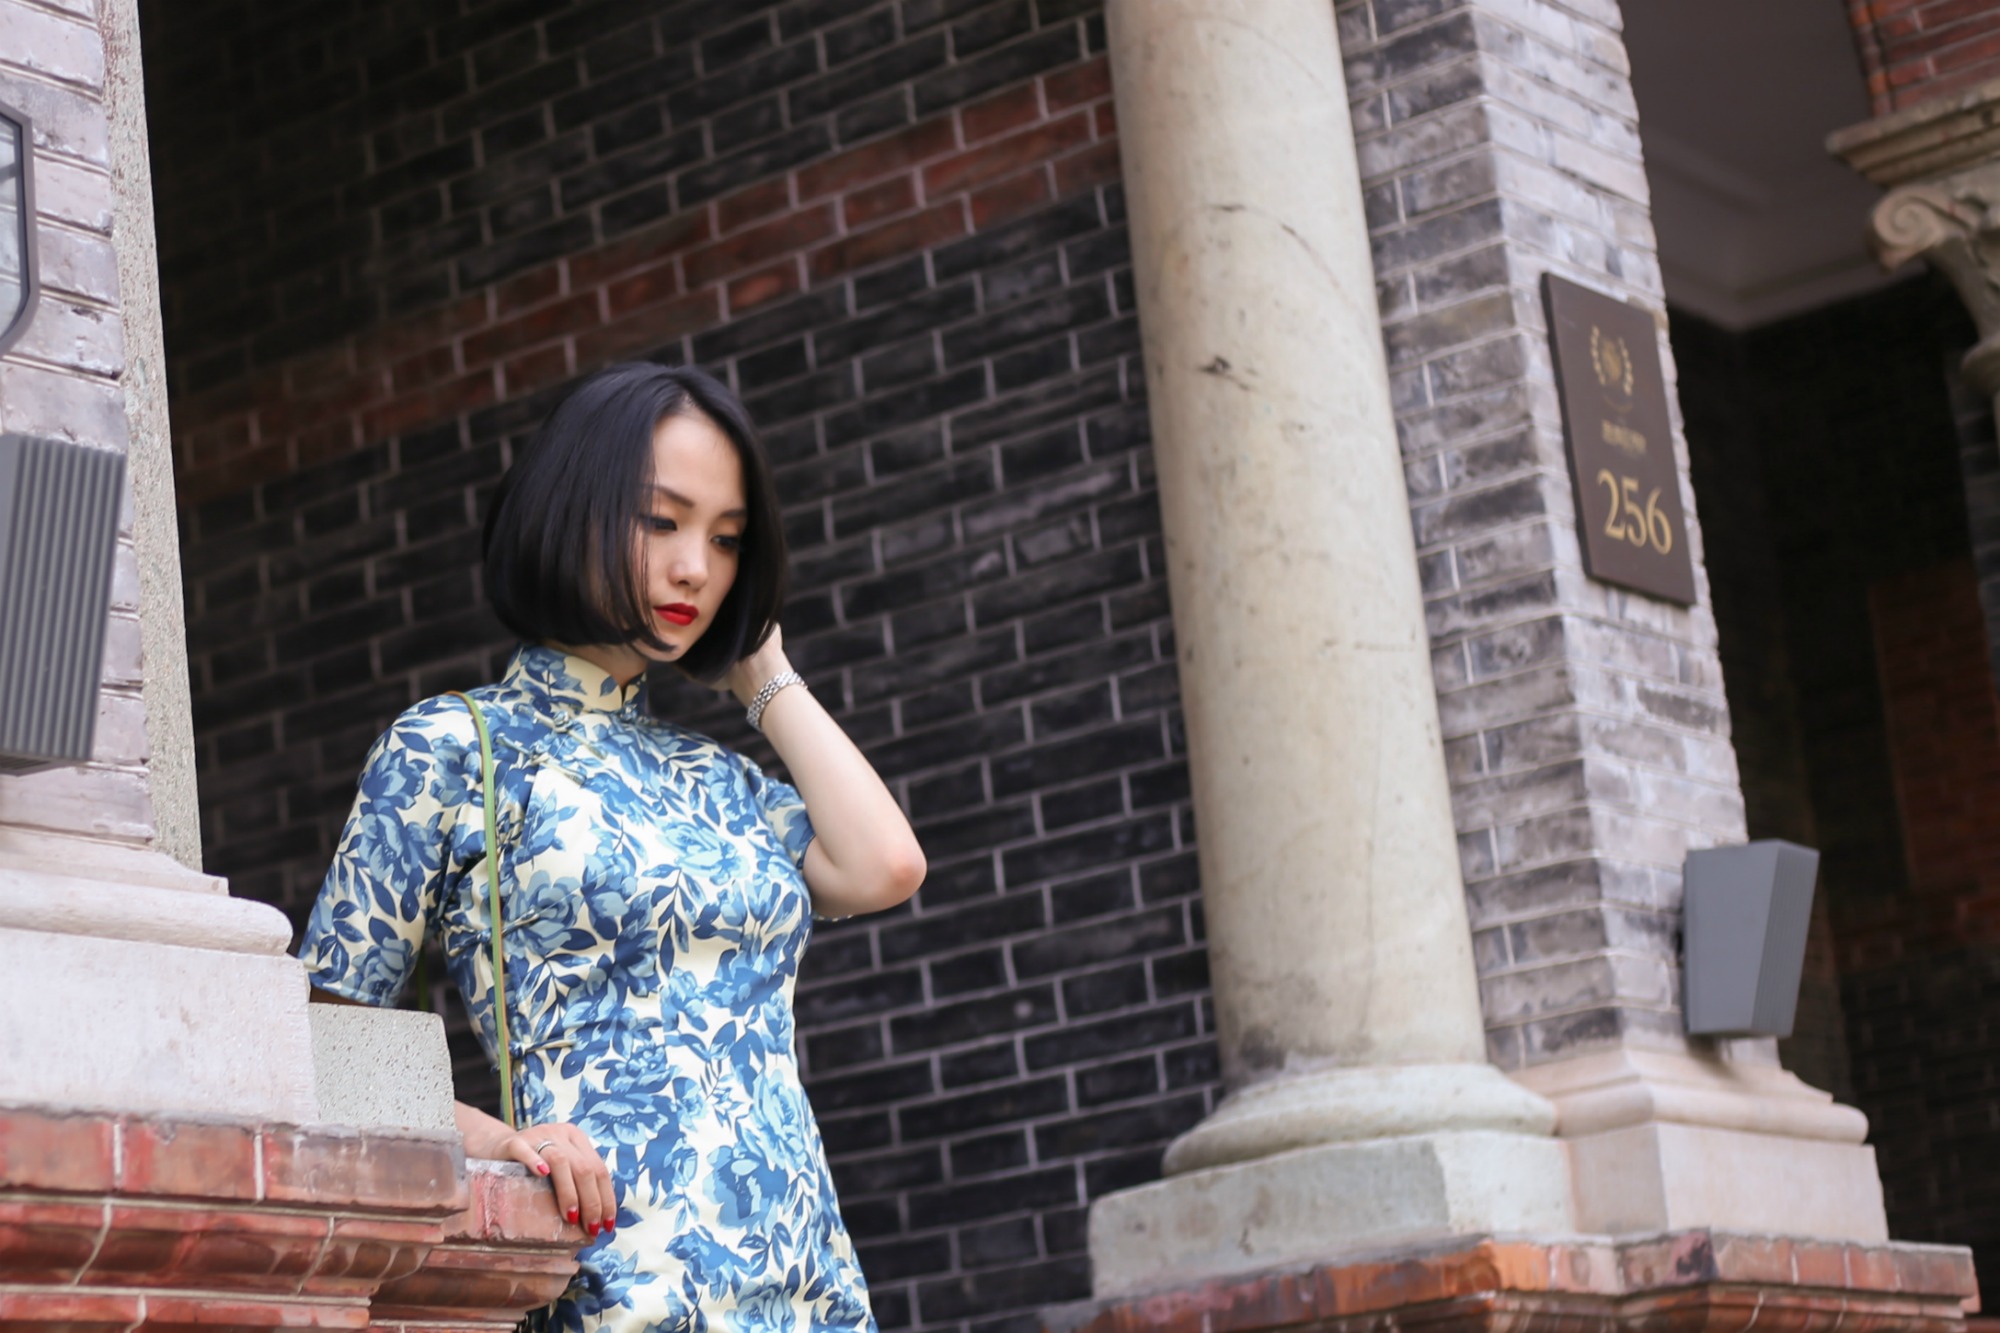 Wearing Blue and white qipao at Sinan Mansions Shanghai